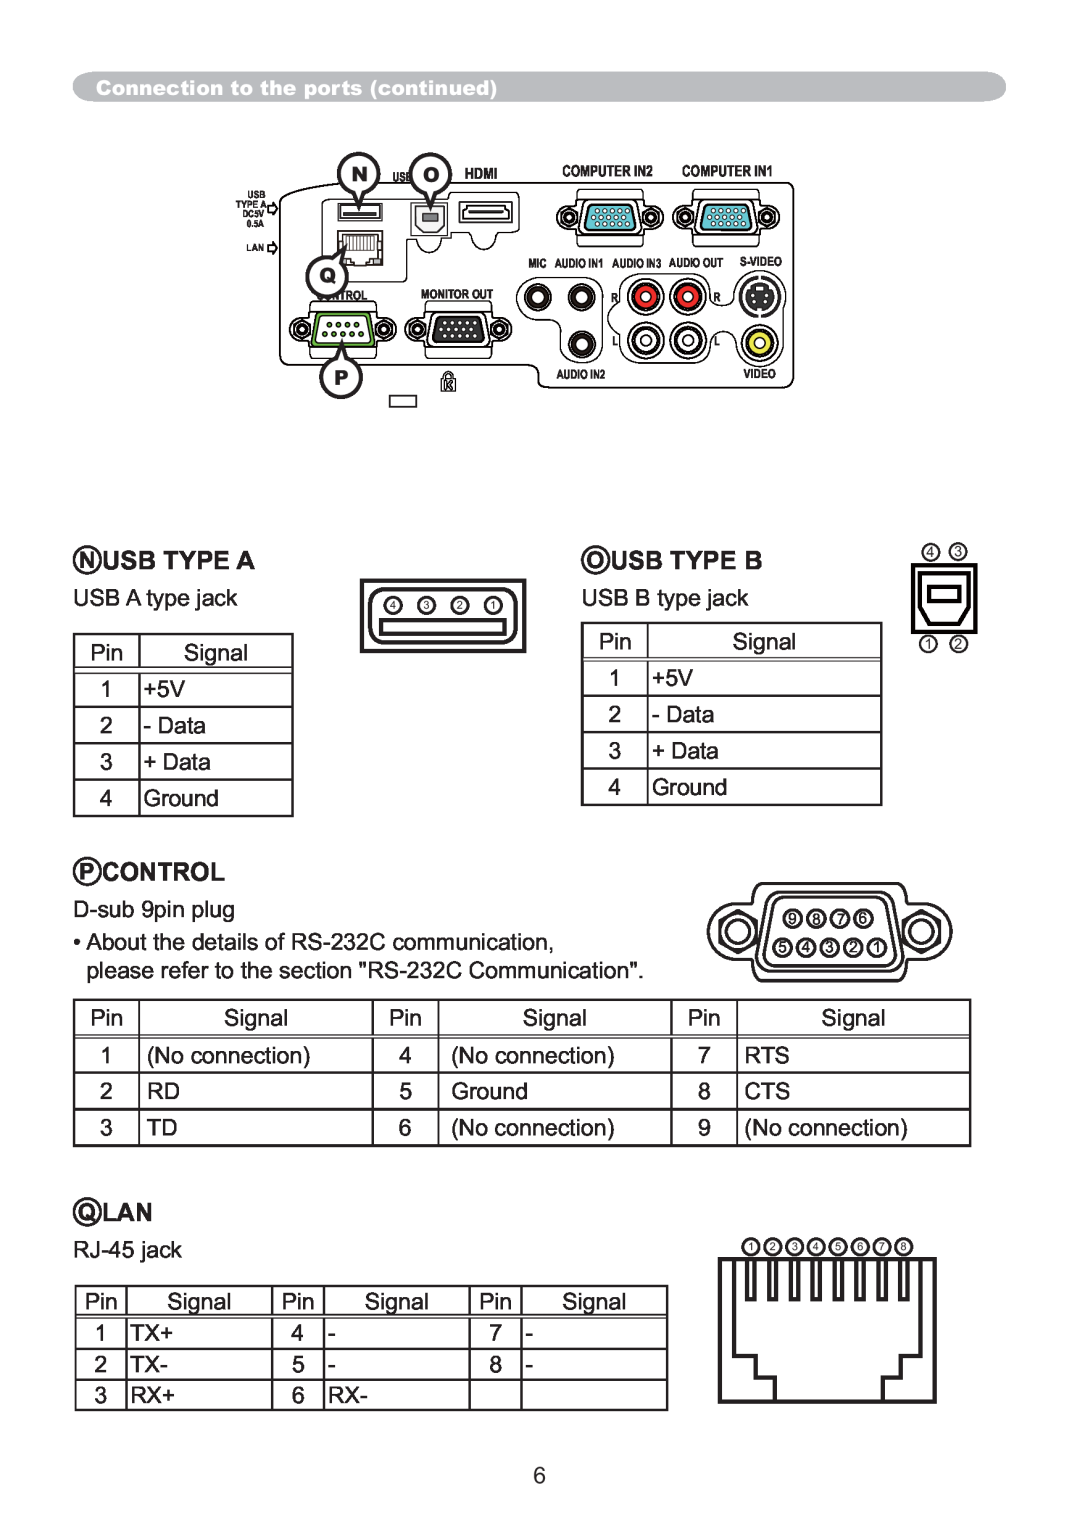 Hitachi IPJ-AW250N user manual N Usb Type A, O Usb Type B, P Control, Q Lan 